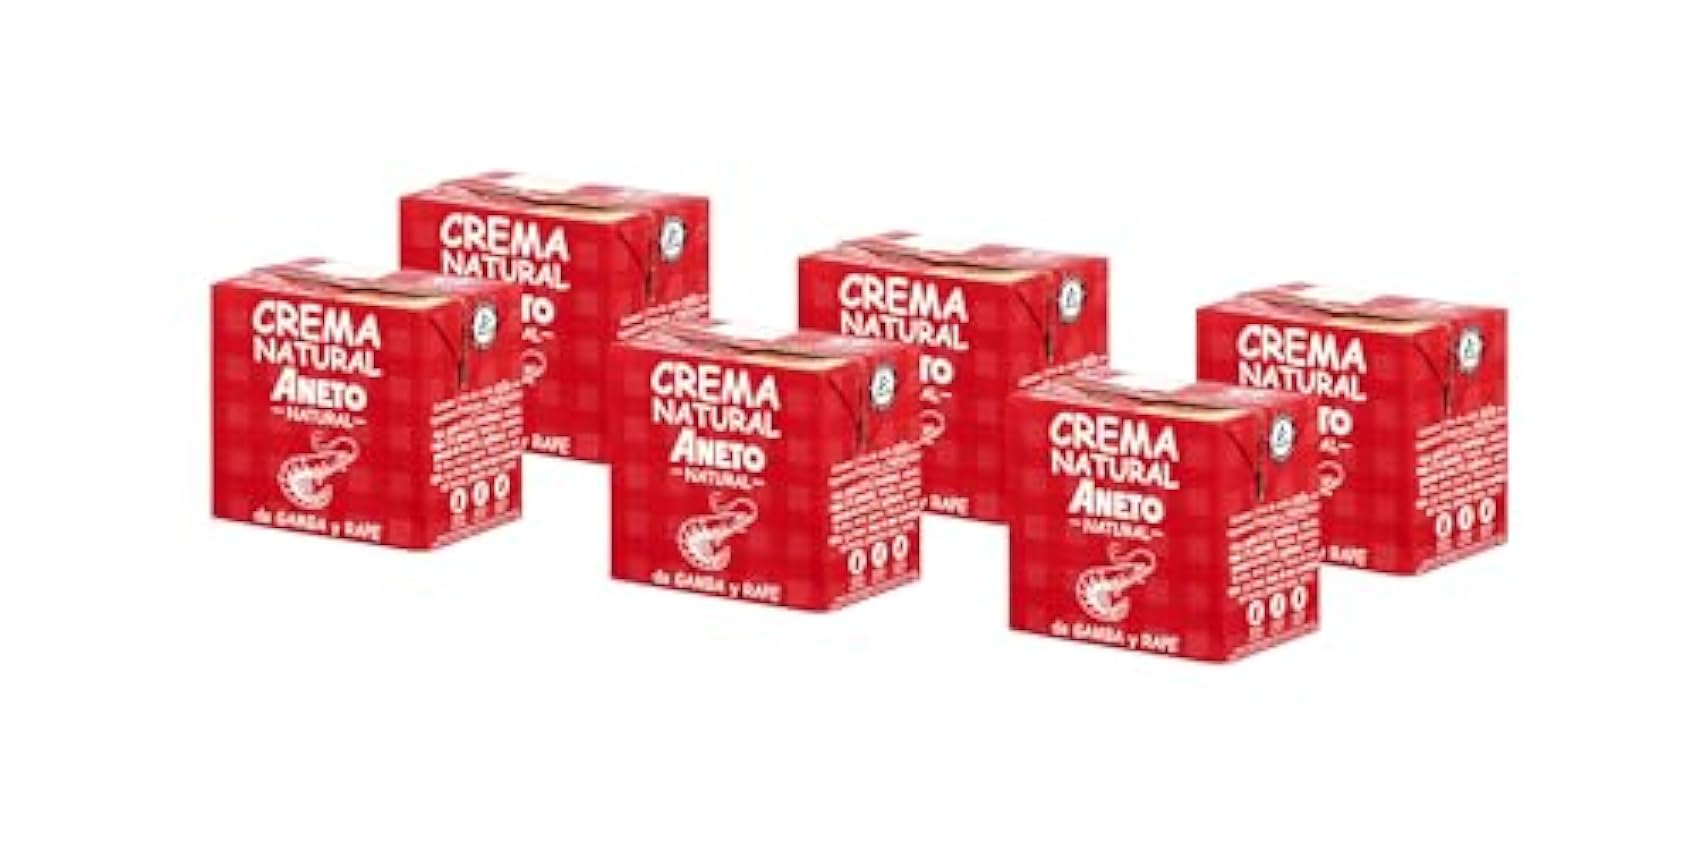 Aneto 100% Natural - Crema de Gambas y Rapé - caja de 6 unidades de 0,5 litro mkqpeIBe